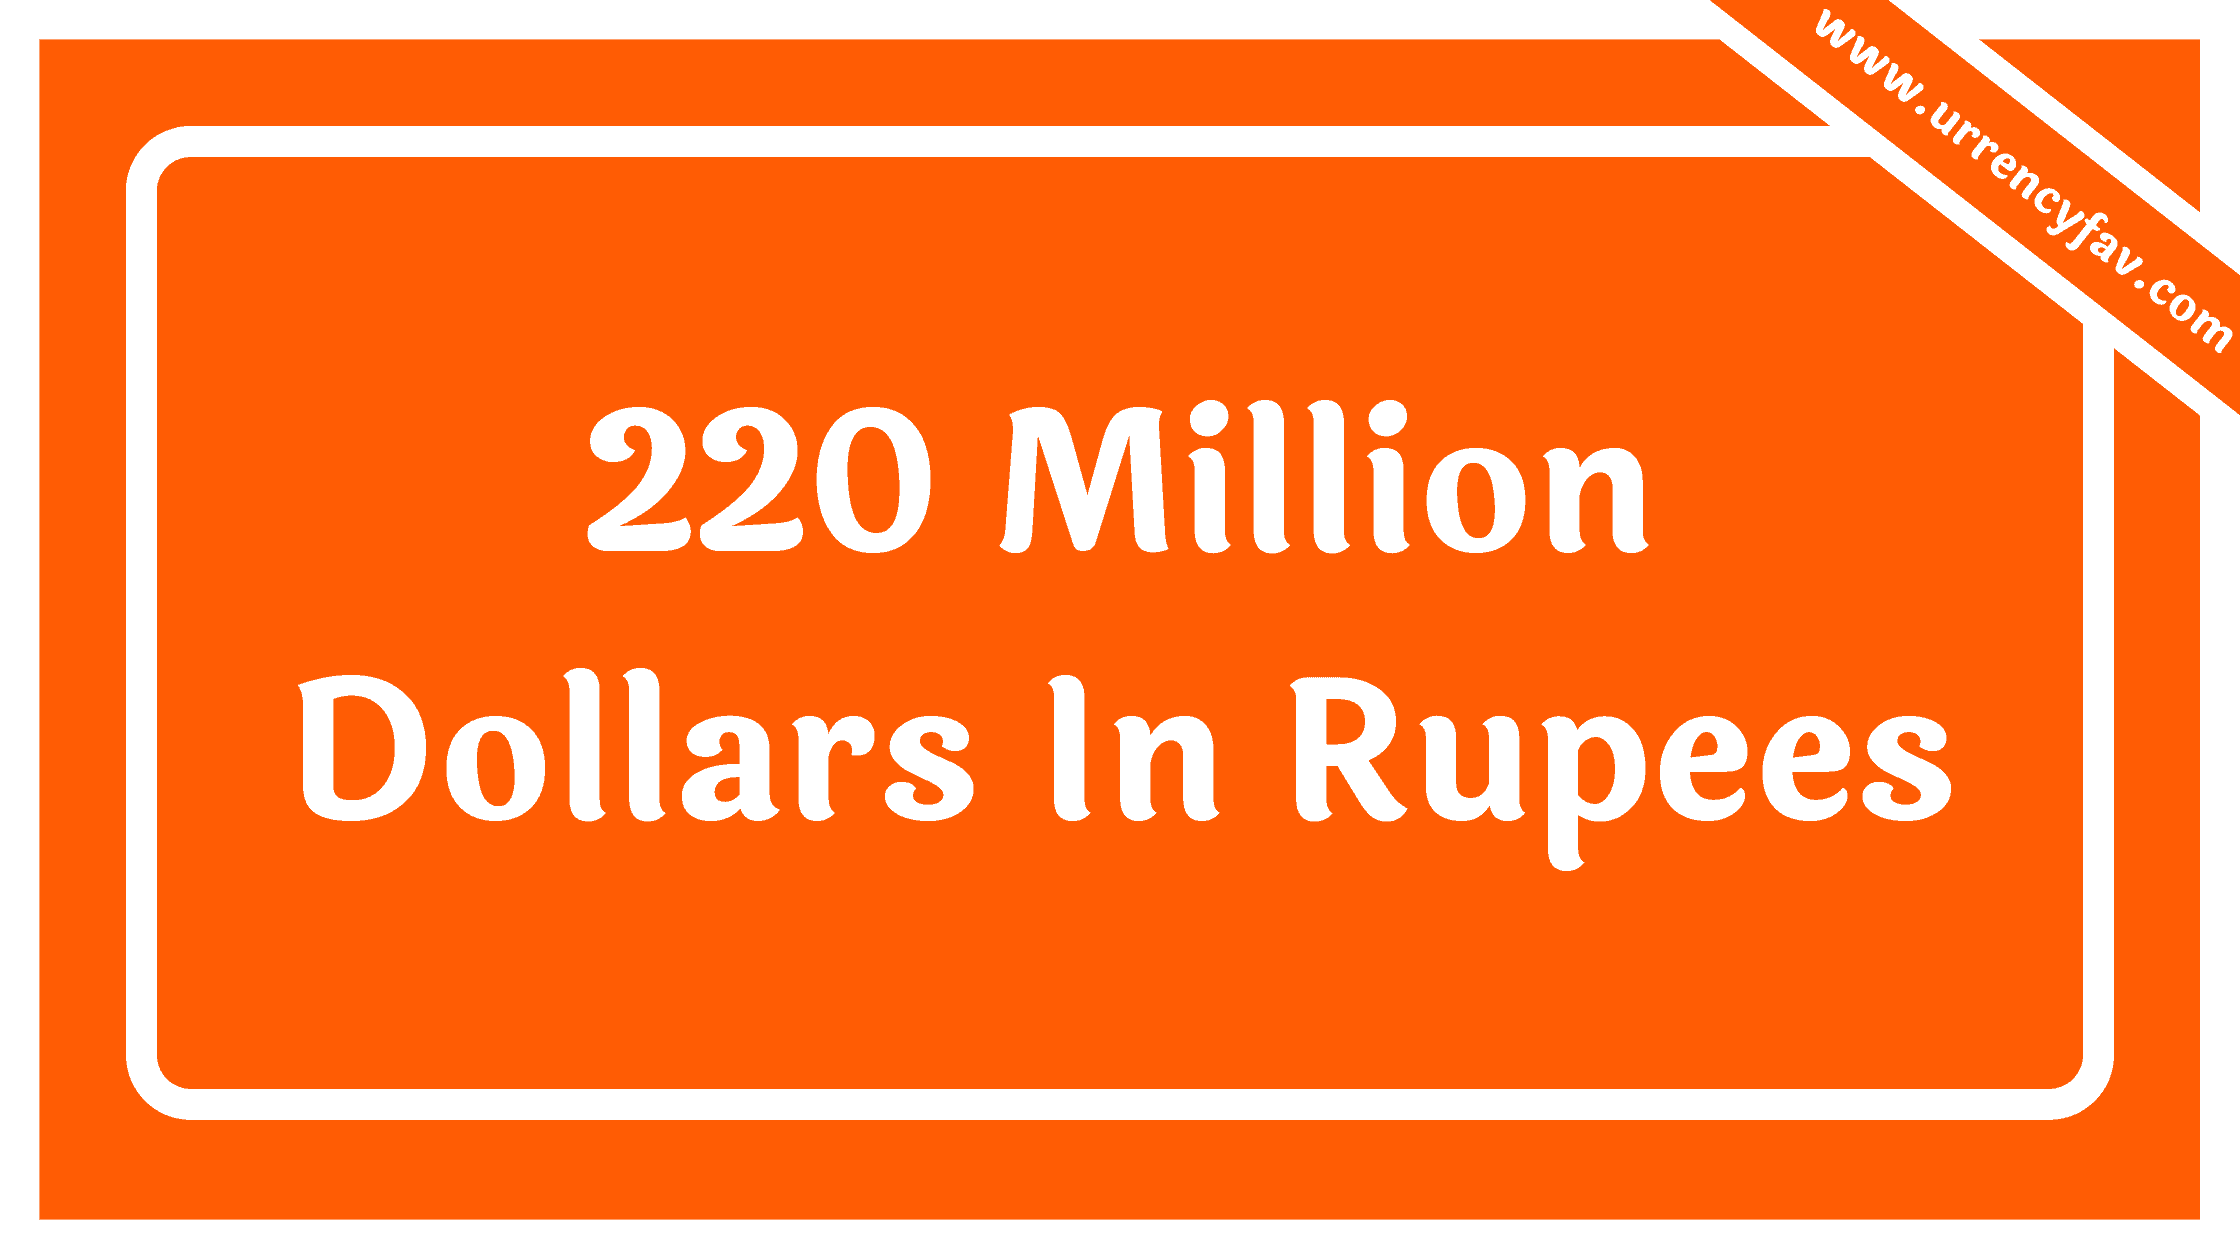 220 Million Dollars In Rupees